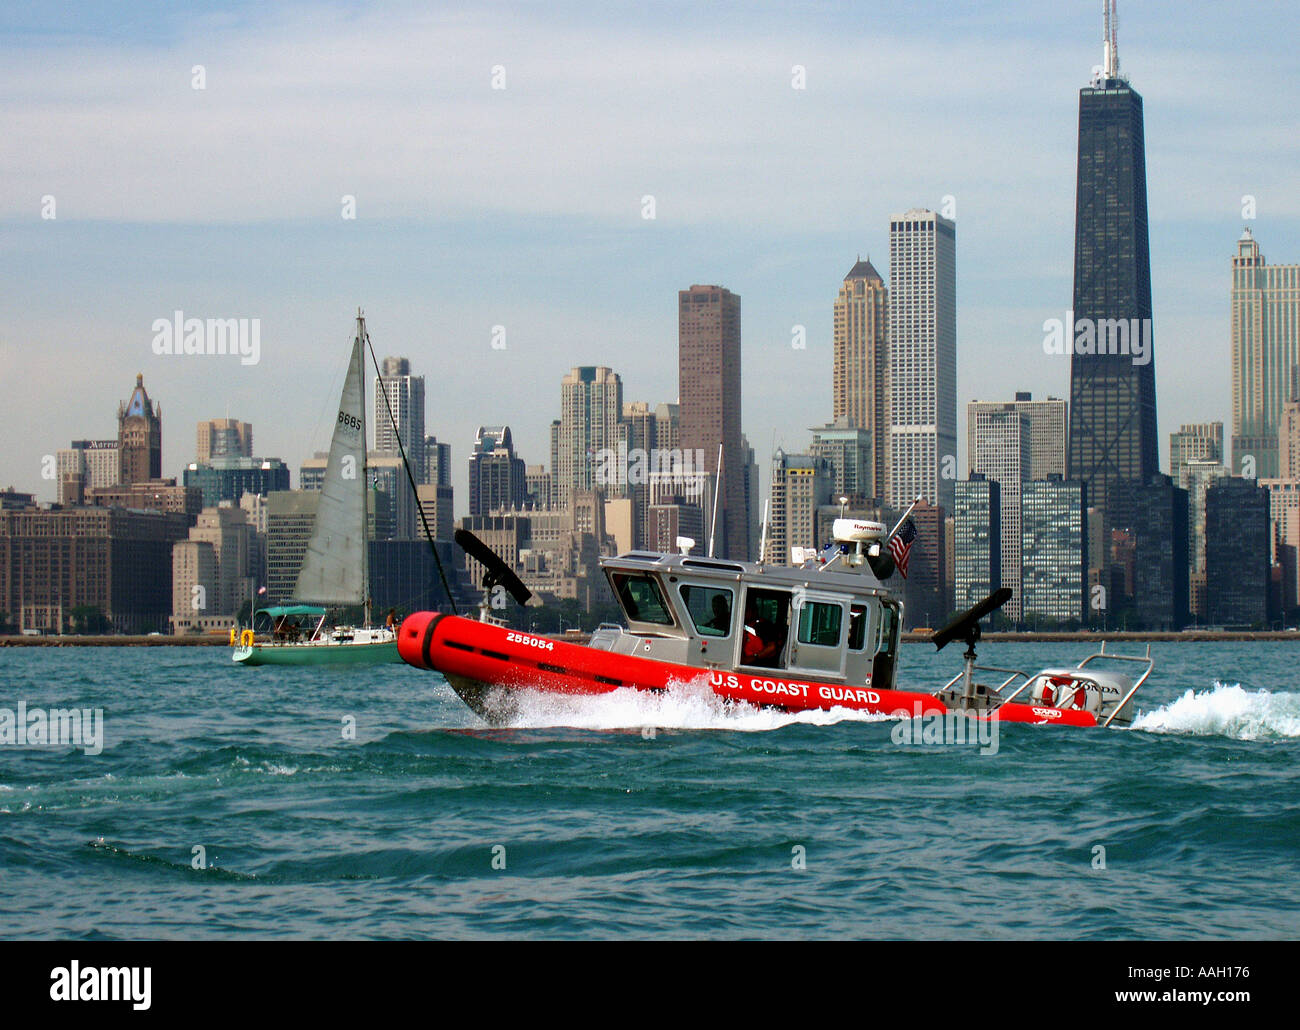 United States Coast Guard Boat, Chicago, Illinois, USA Stock Photo